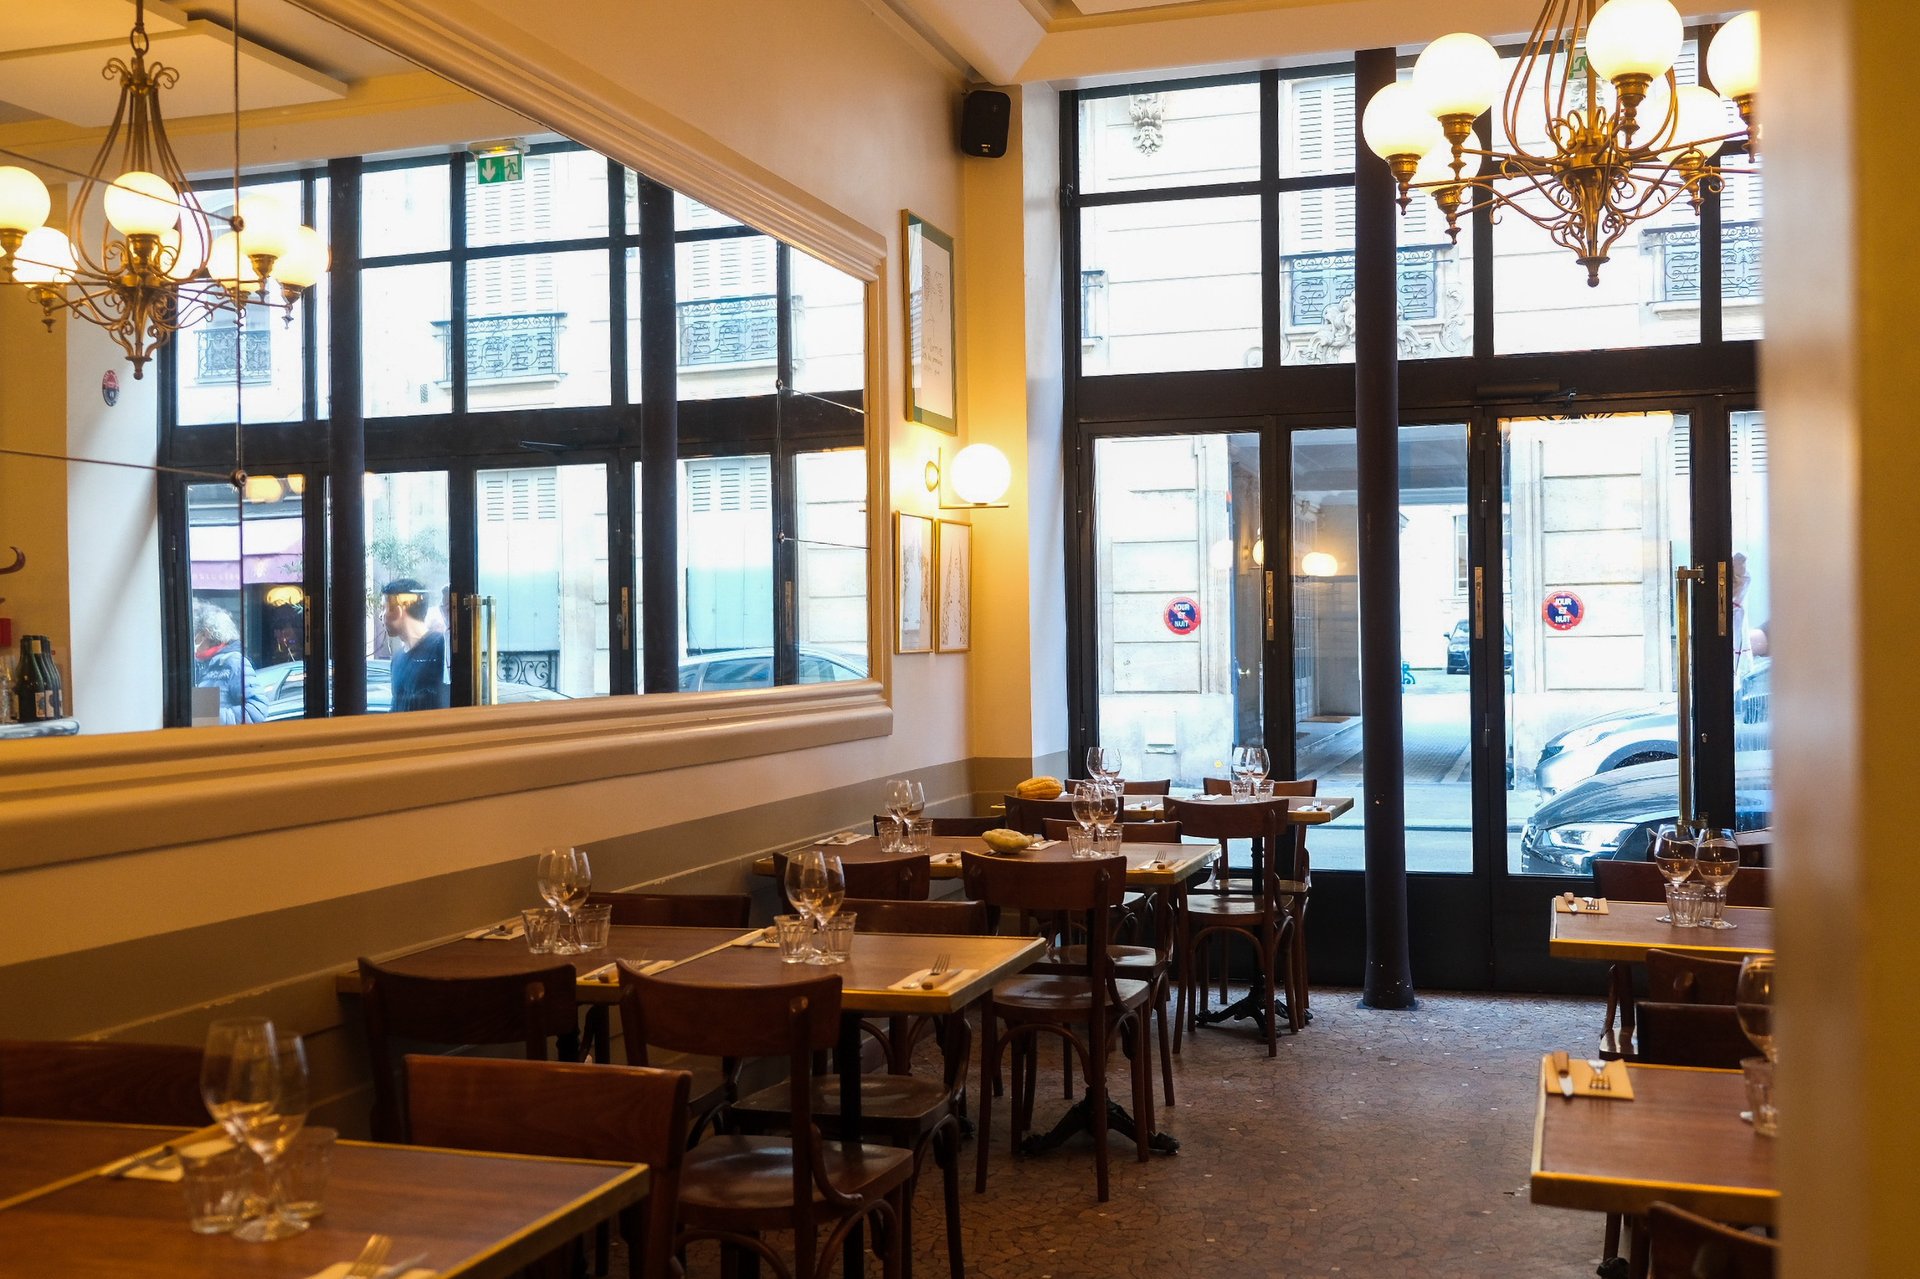 Le Mermoz - Bistro Restaurant in Paris, France | The Vendry